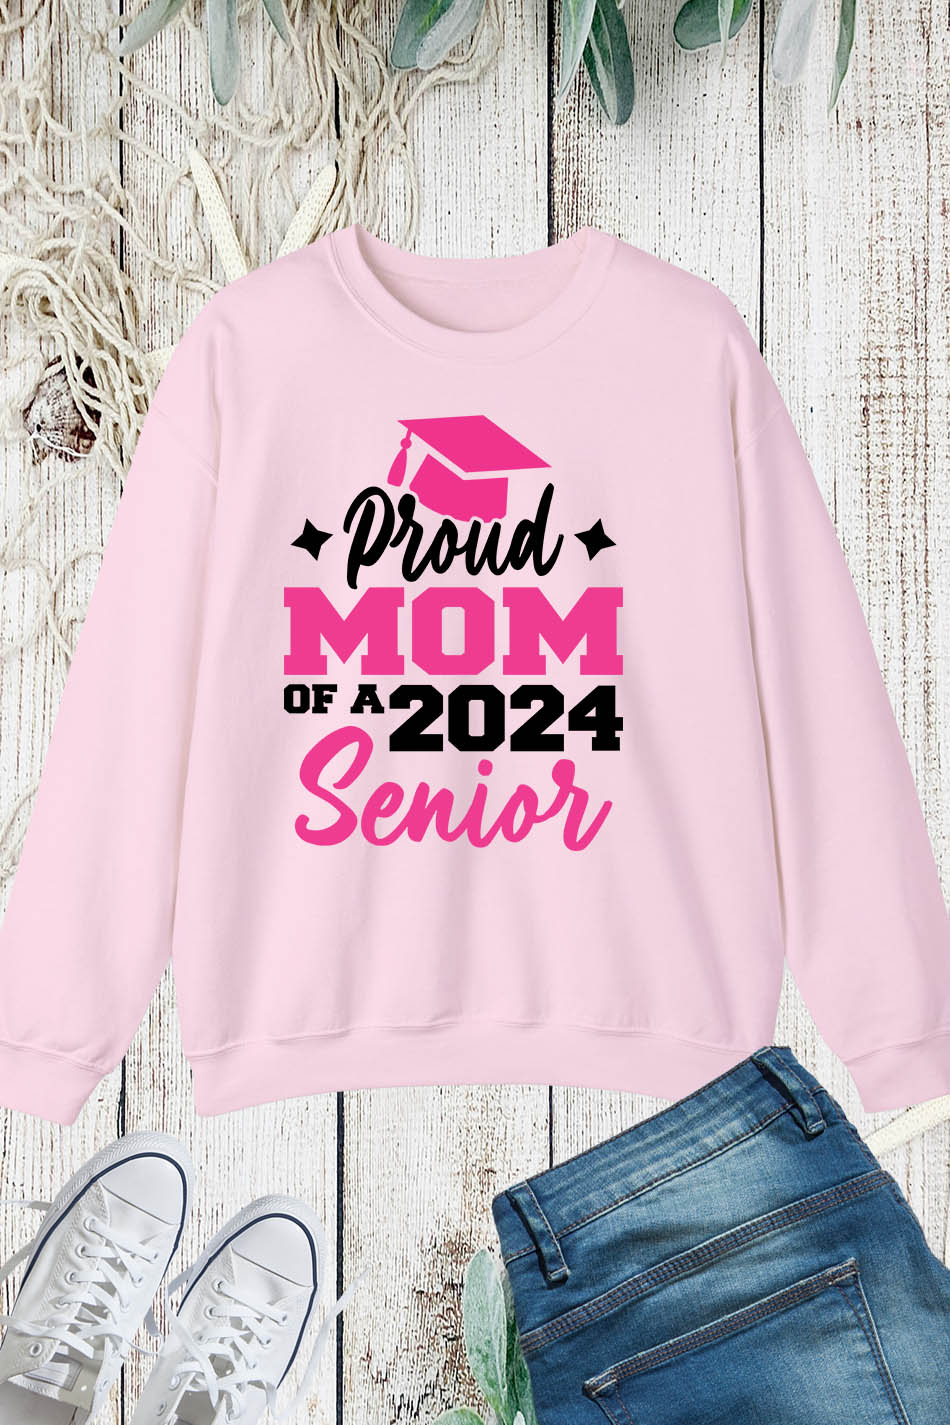 Proud Mom of 2024 Graduate Senior Grad Sweatshirts